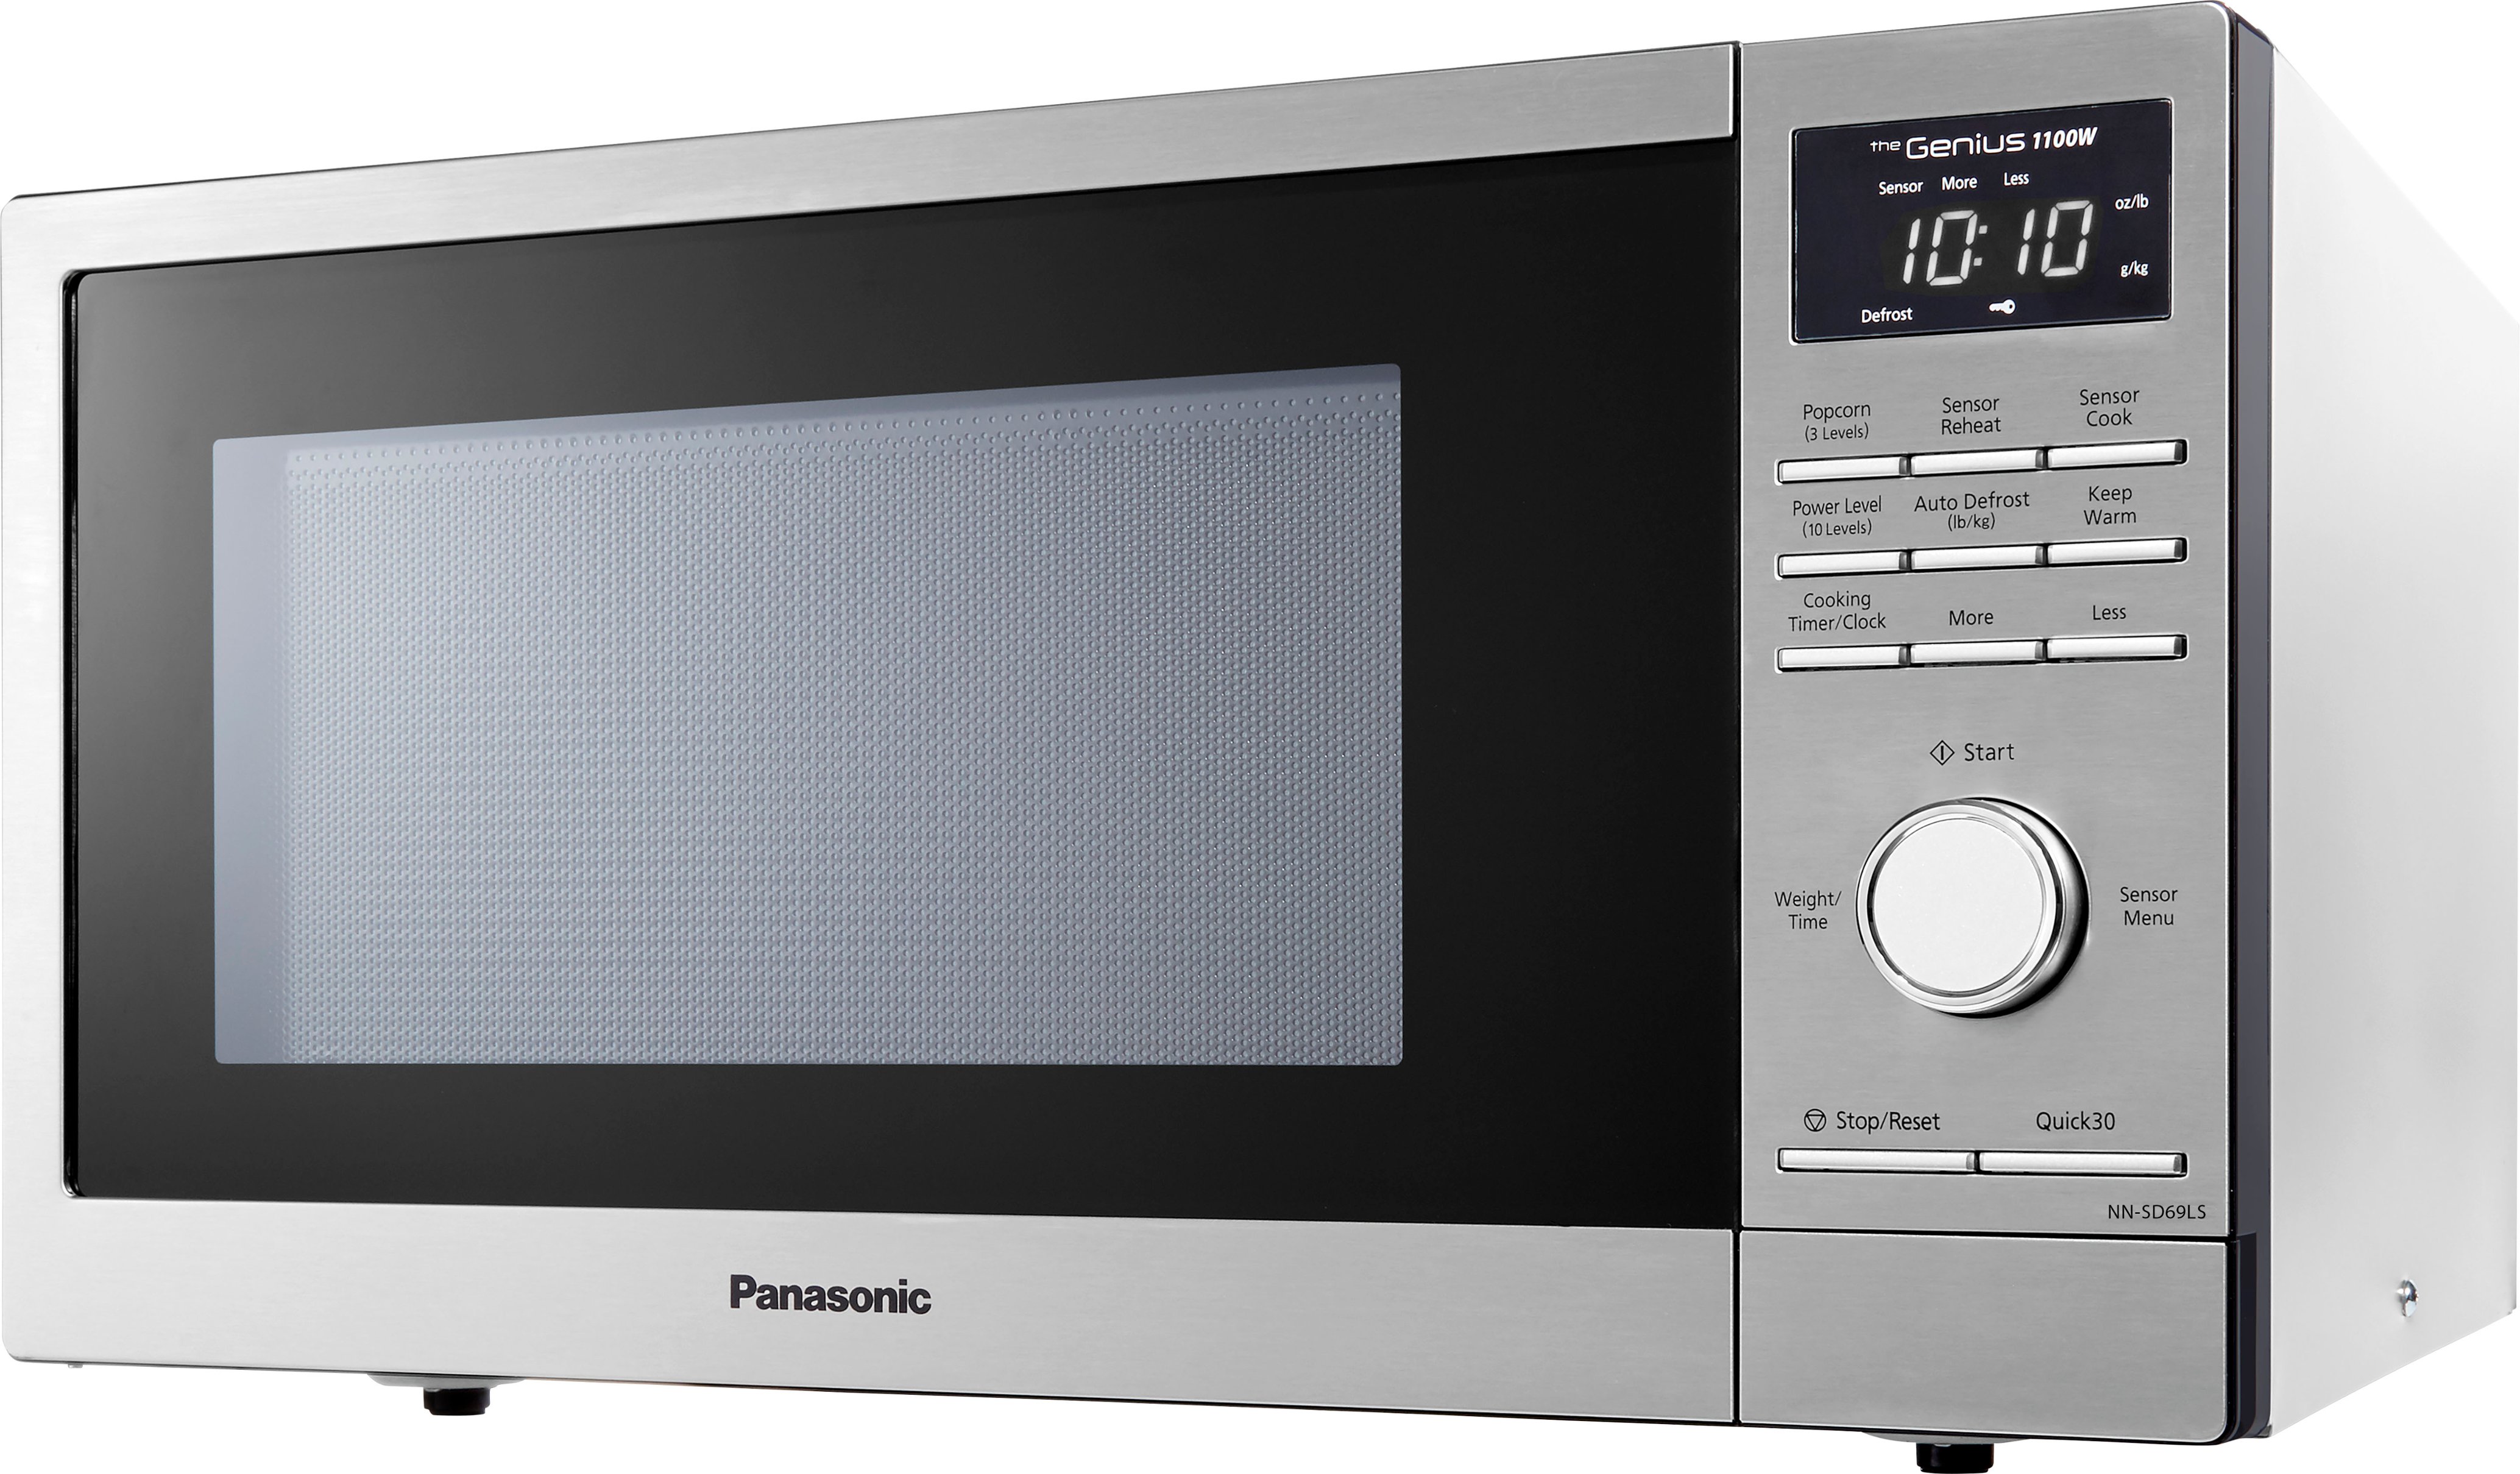 Panasonic - 1.3 Cu. Ft. 1100 Watt SD69LS Microwave with Sensor Cooking - Stainless Steel